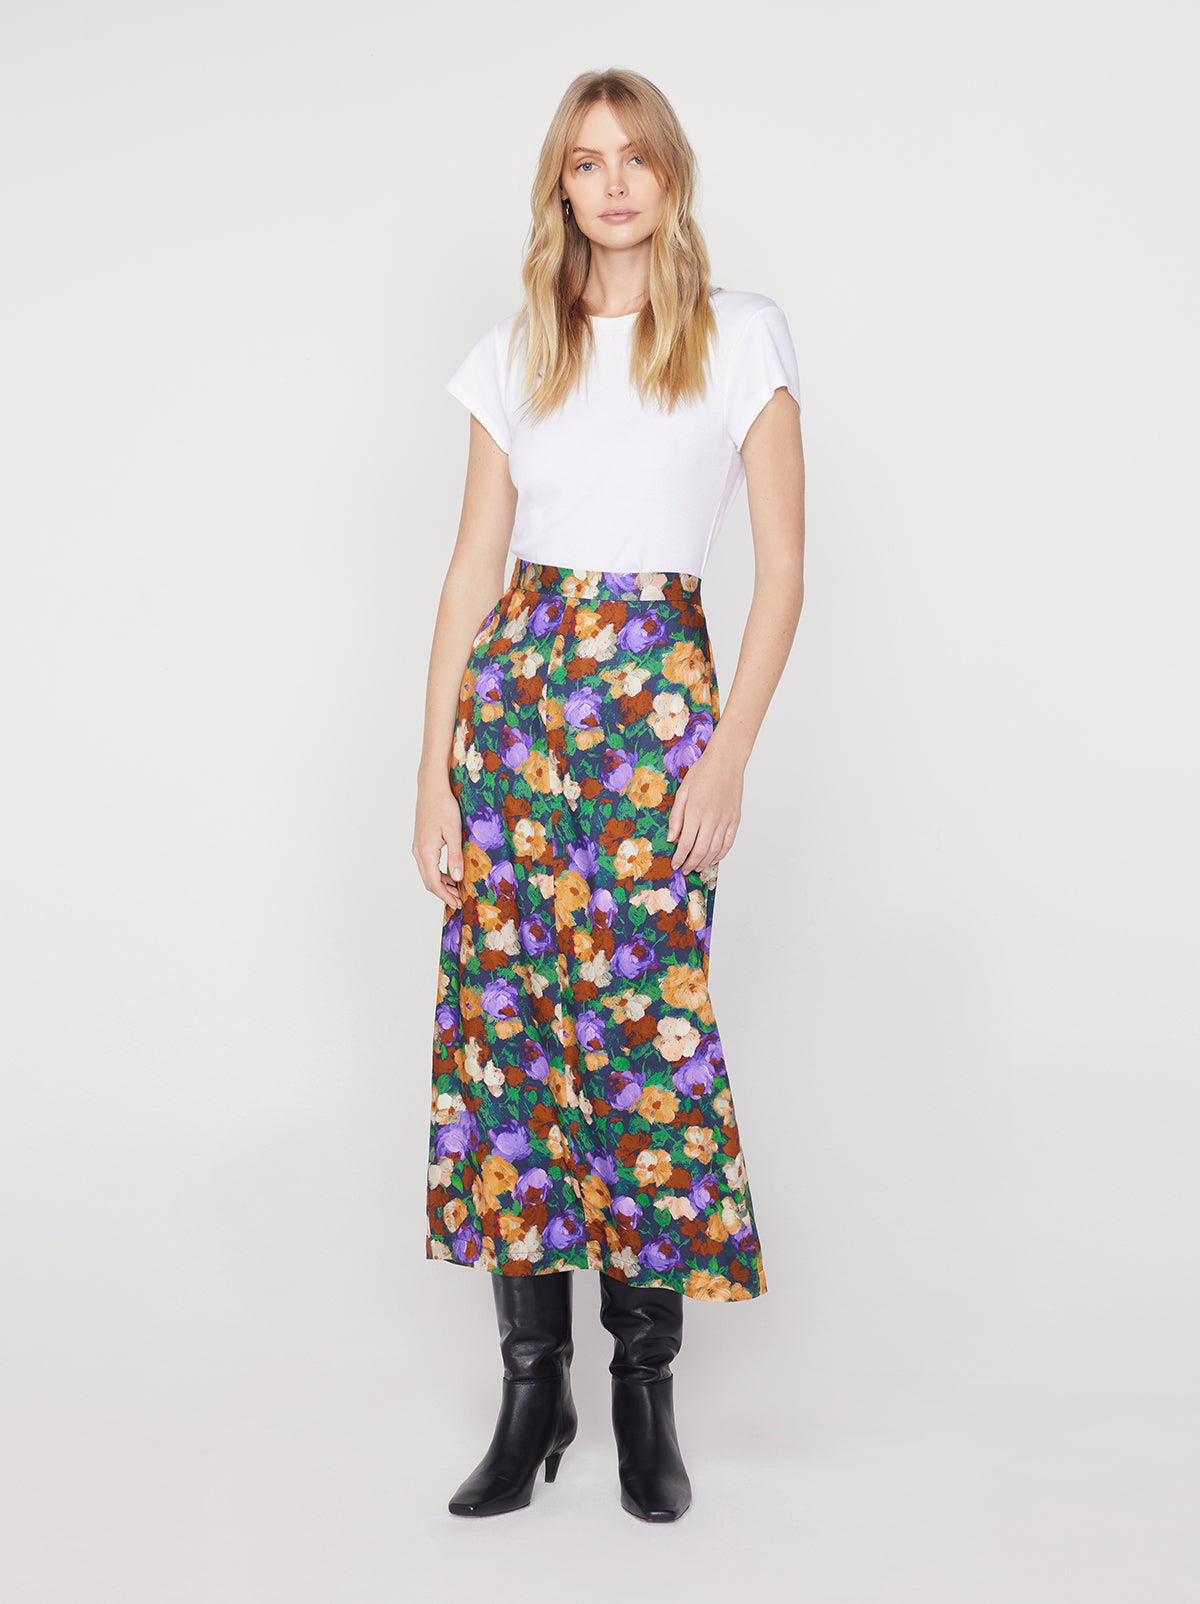 Laurel Iris Impressionist Floral Skirt By KITRI Studio